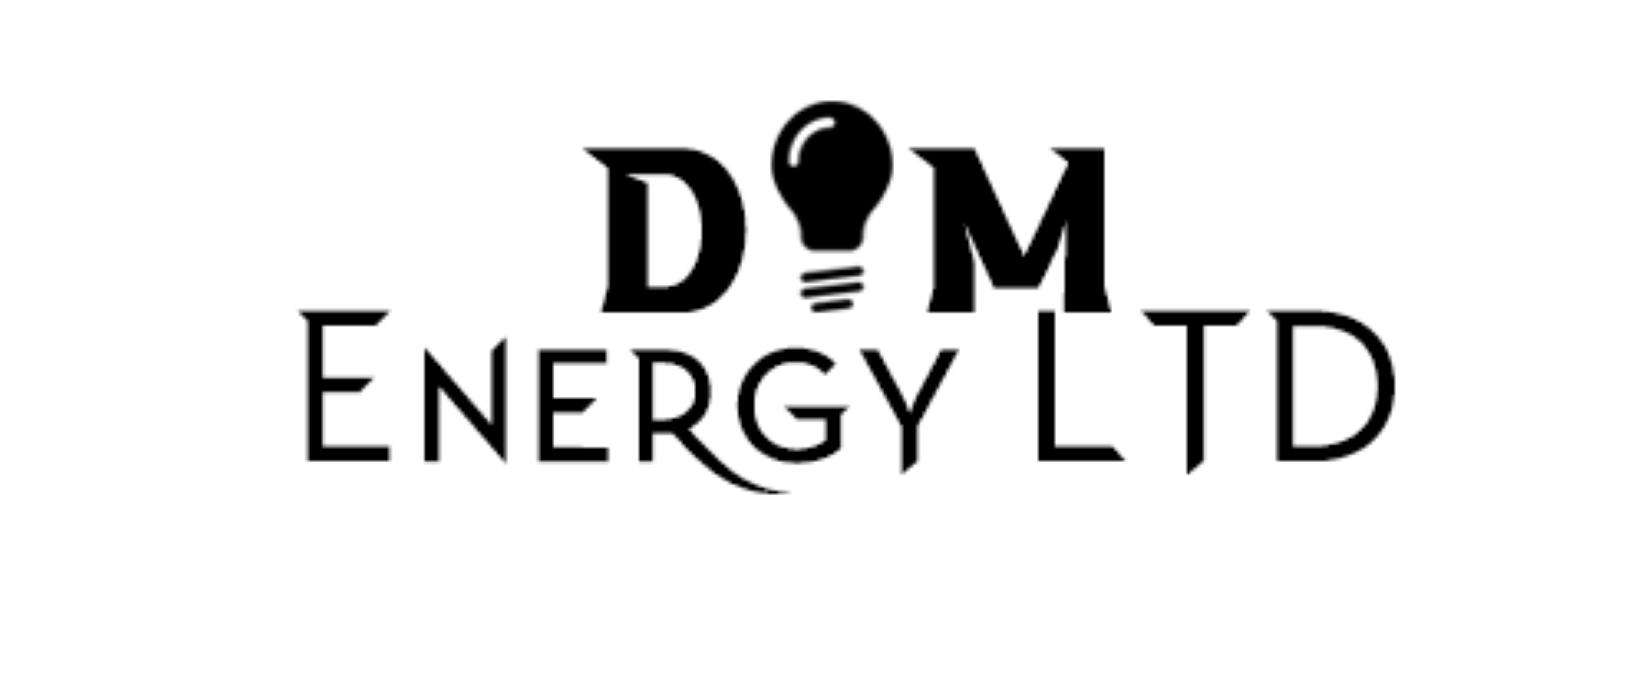 DIM Energy ltd Logo